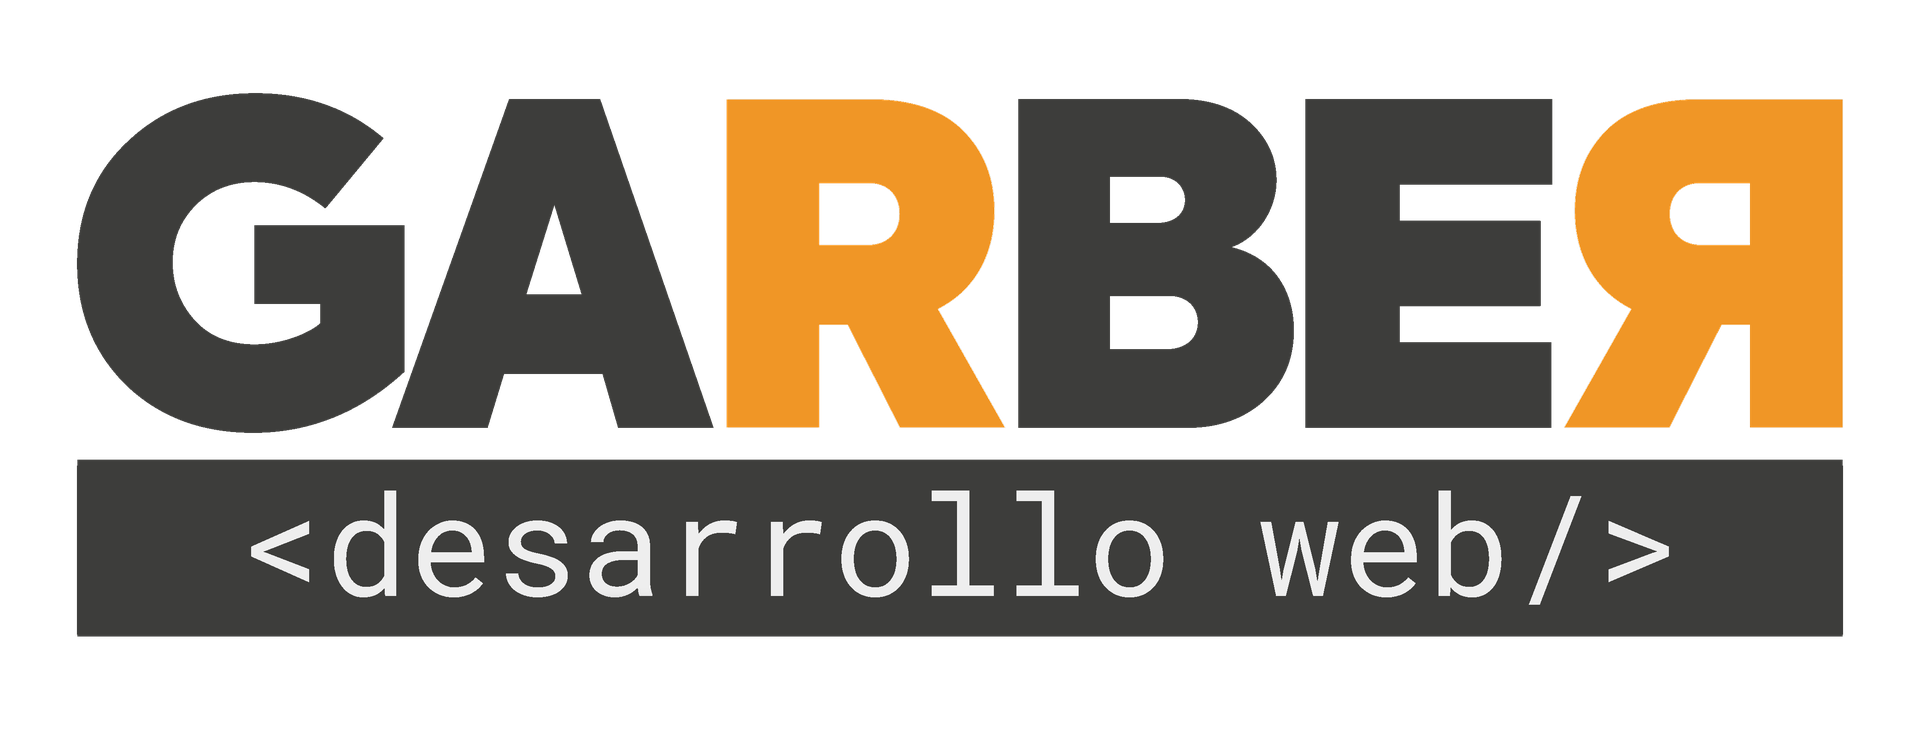 Garber Web Solutions SL, Garber